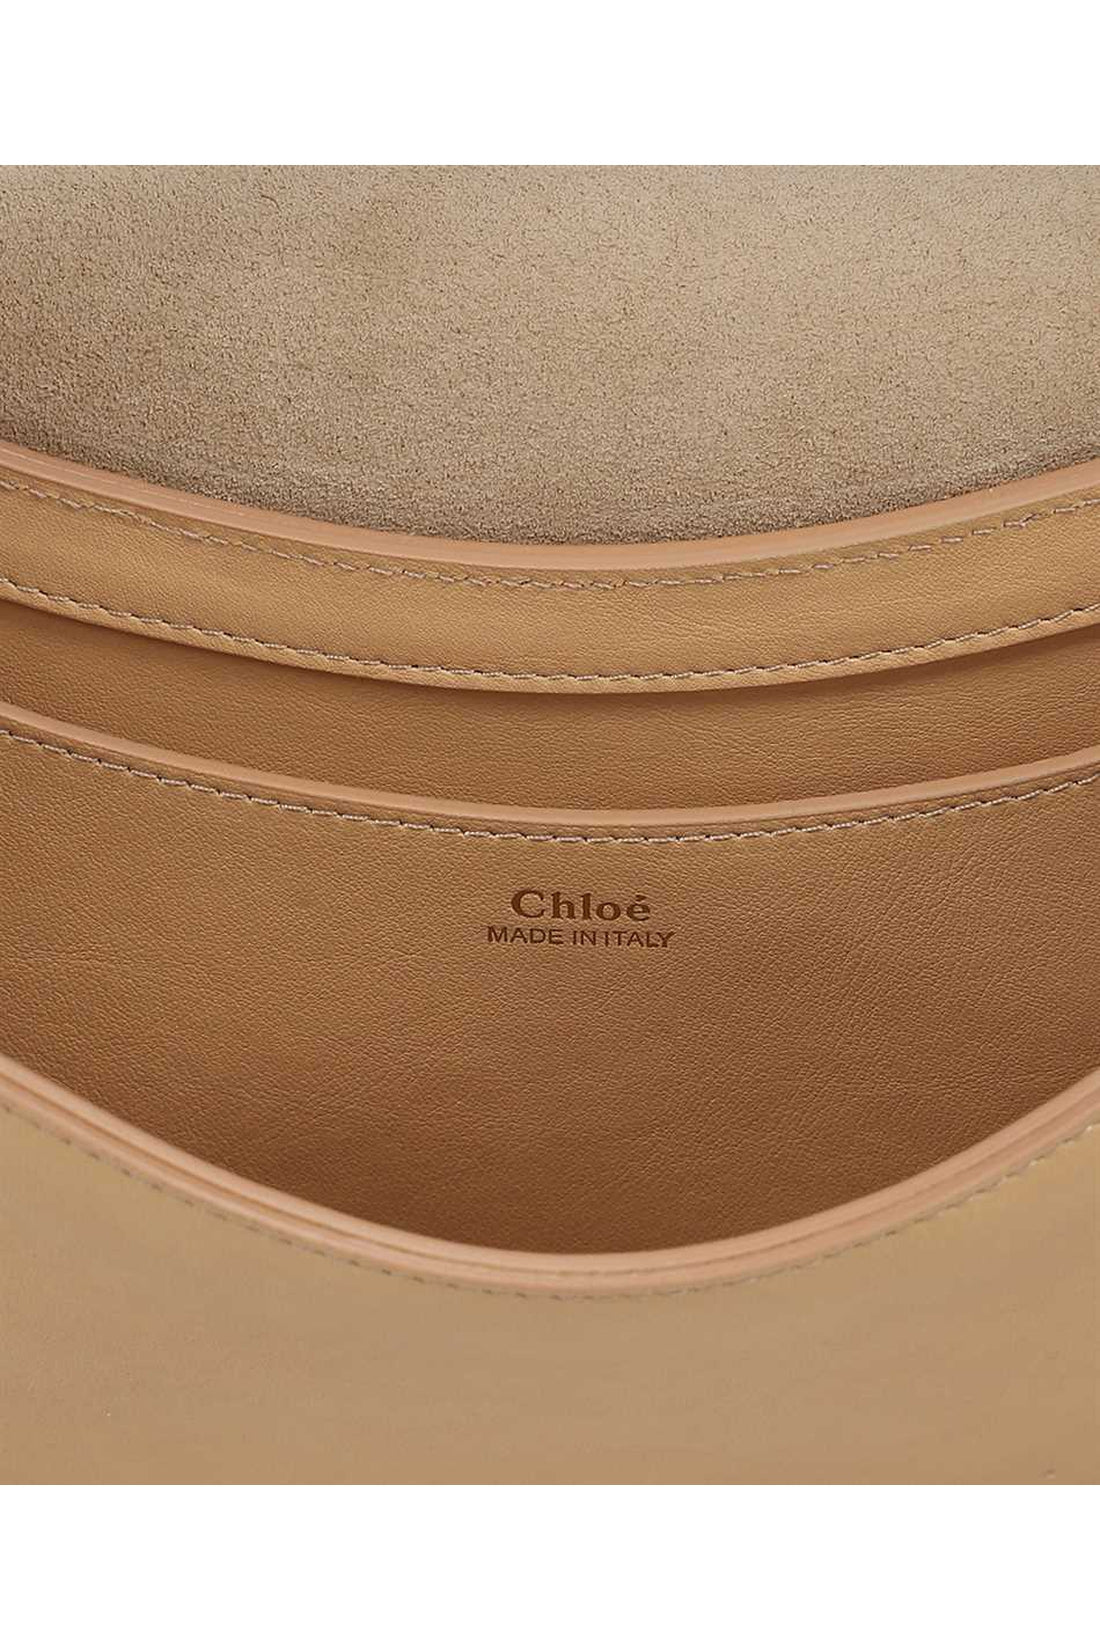 Chloé-OUTLET-SALE-Leather hobo-bag-ARCHIVIST